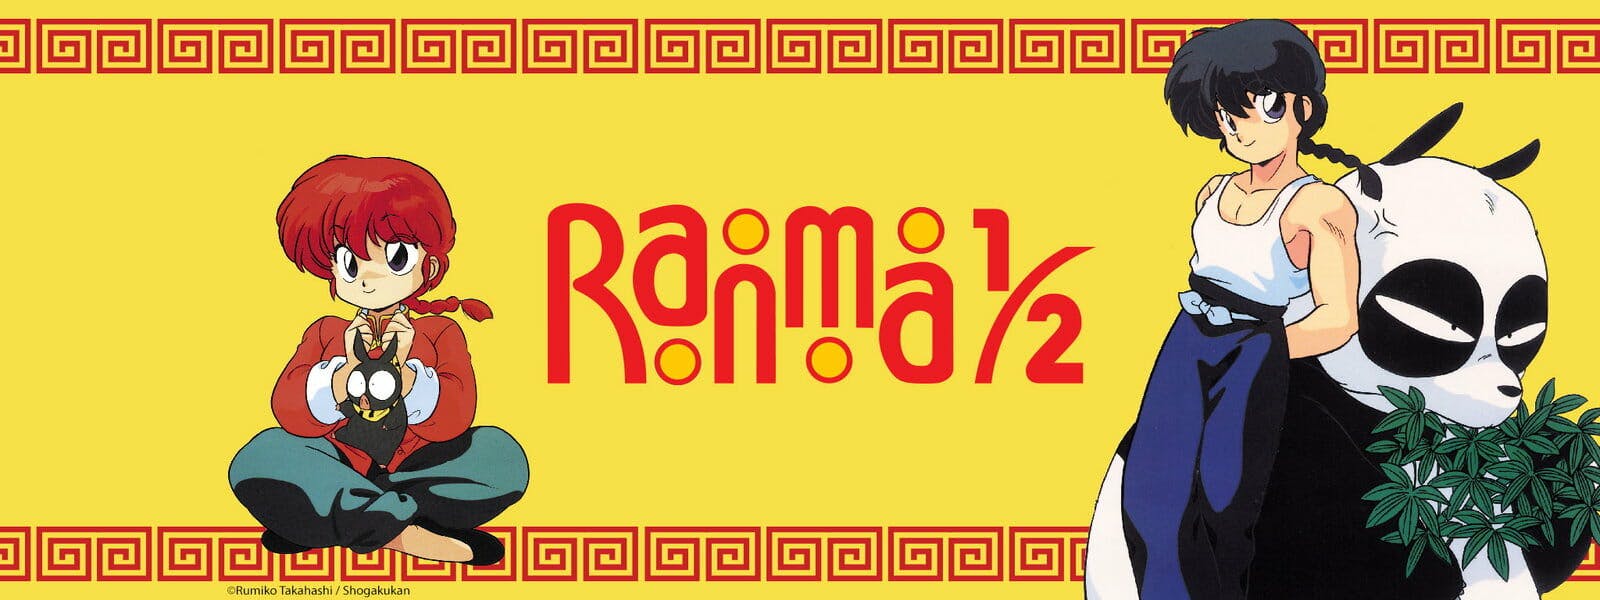 romance anime Ranma 1/2